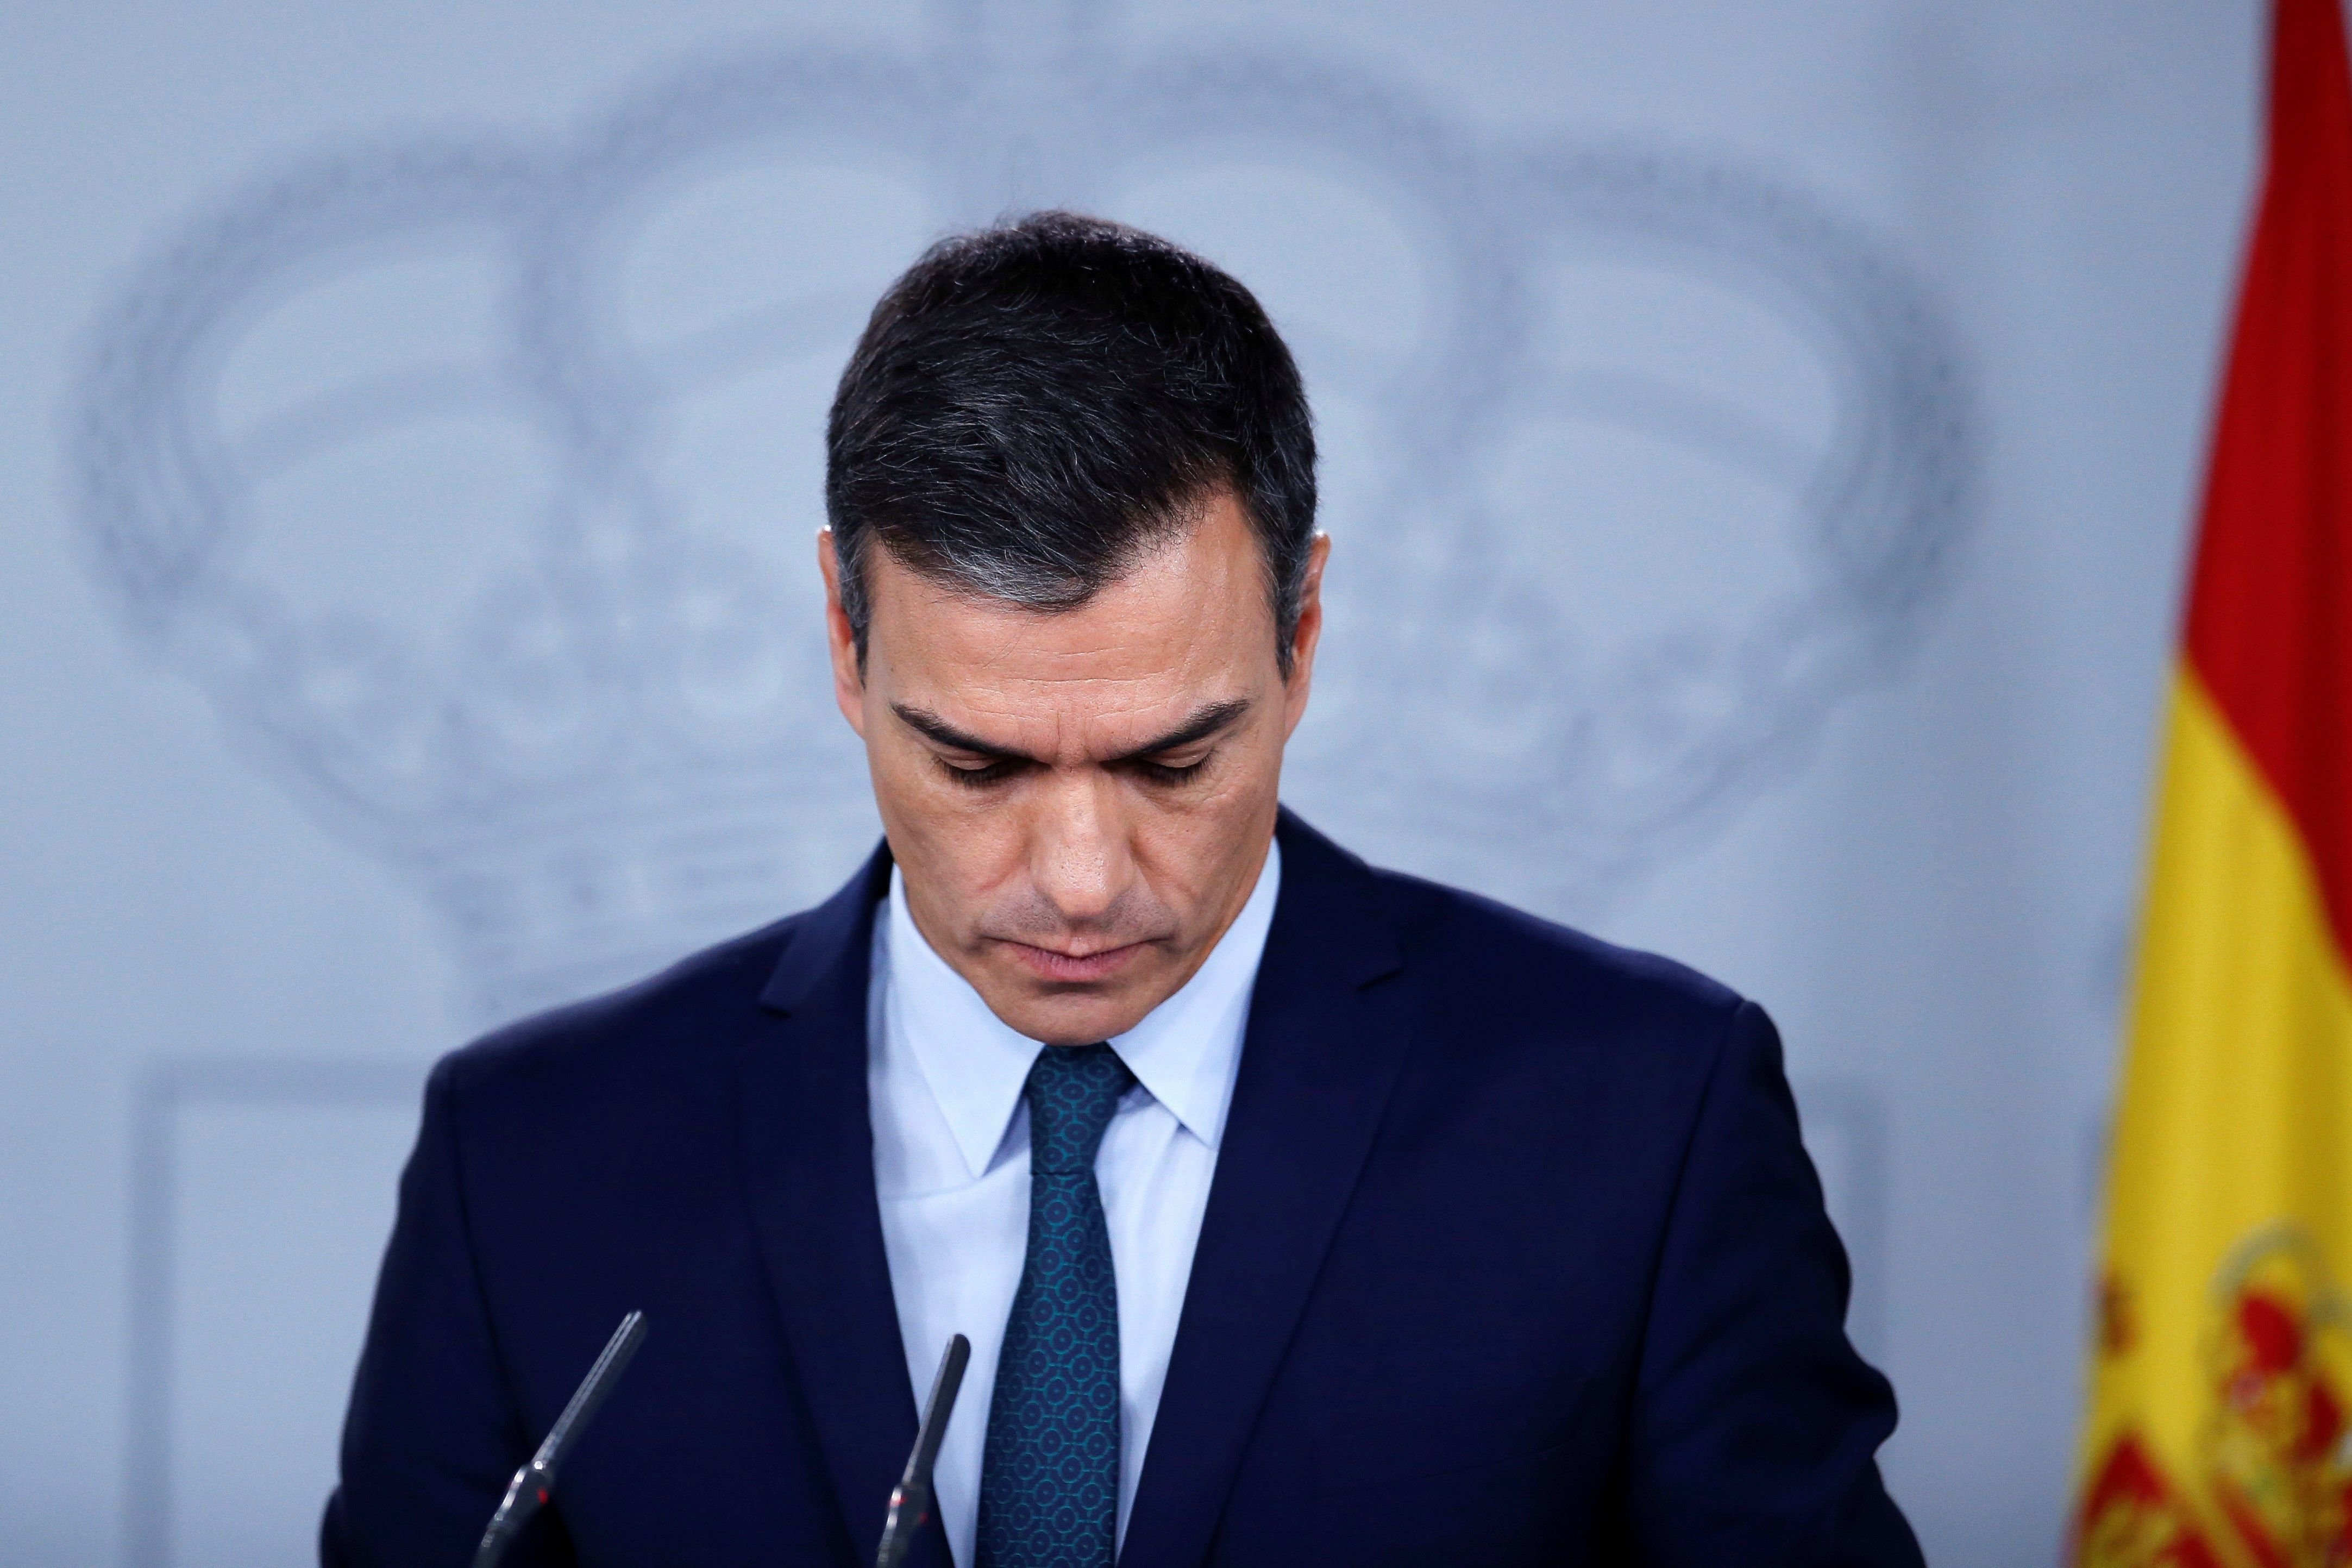 Over 82% of Catalans distrust Pedro Sánchez